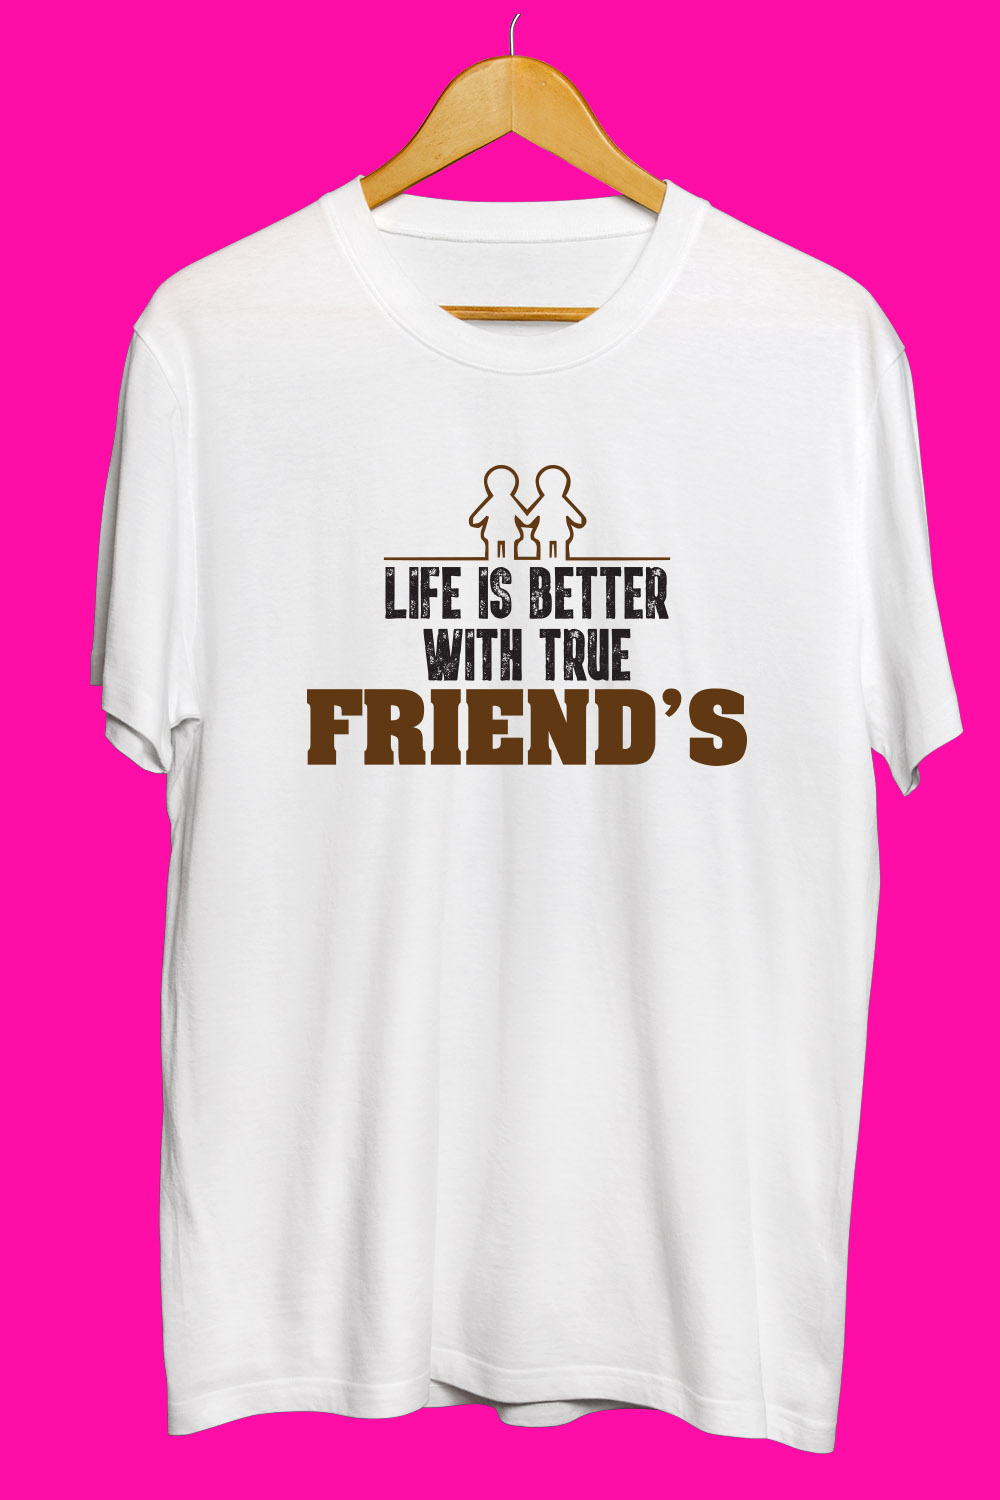 Friendship Day T Shirt Bundle pinterest preview image.